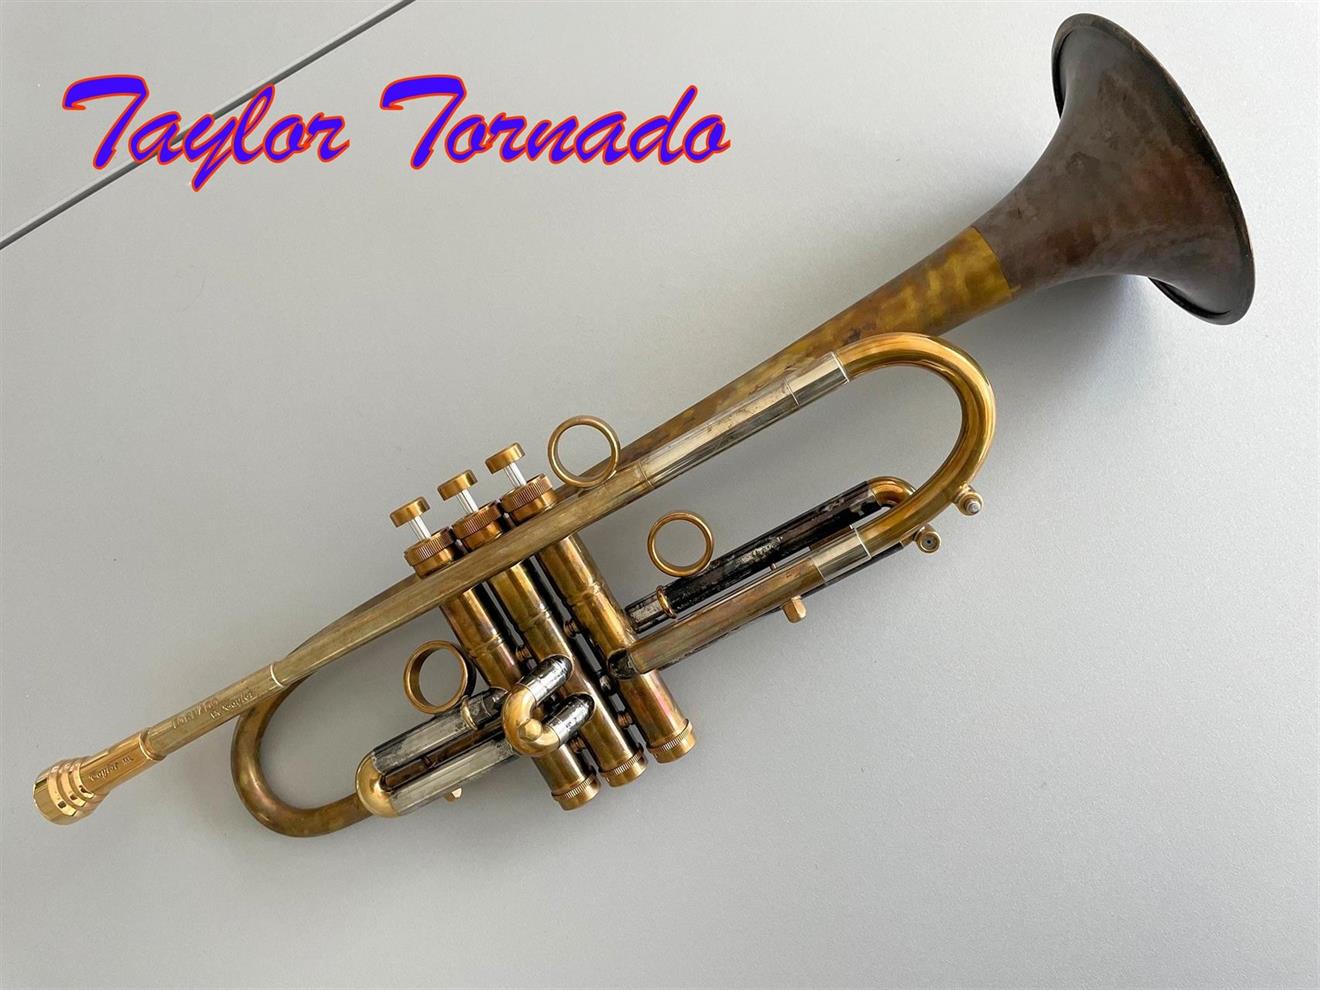 Taylor Tornado antique brass